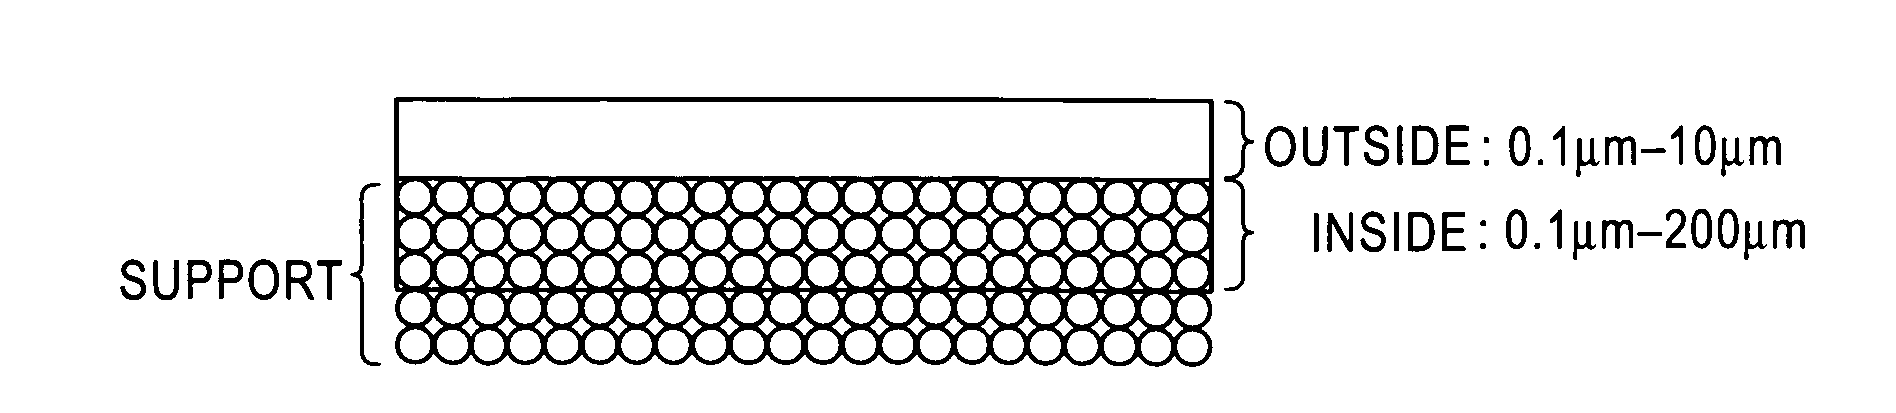 Zeolite membrane support and zeolite composite membrane